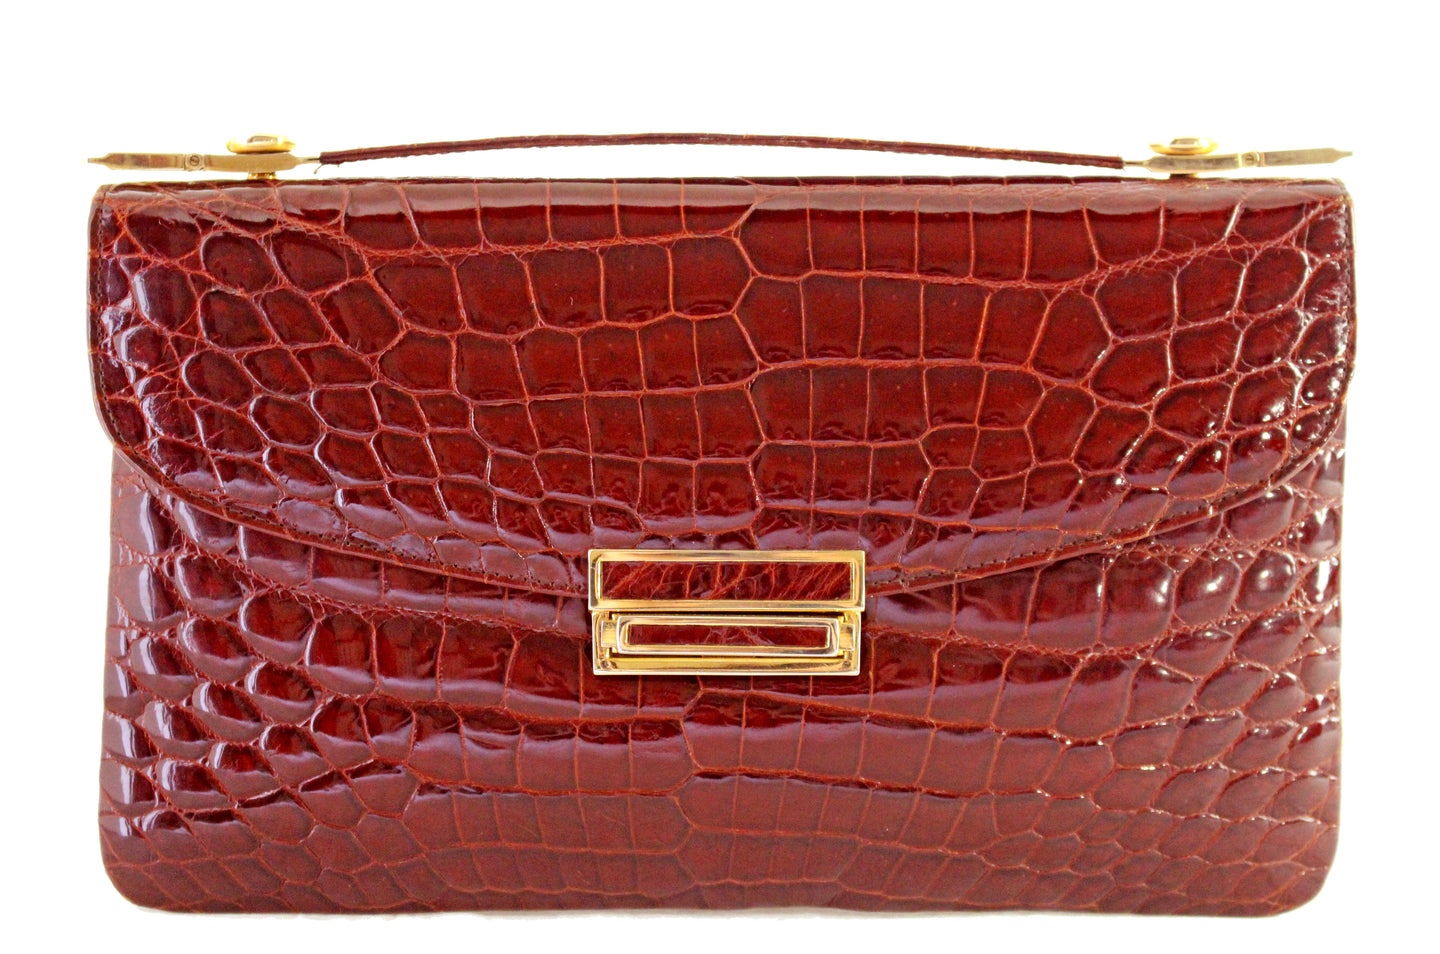 Rectangular cognac color crocodile skin handbag